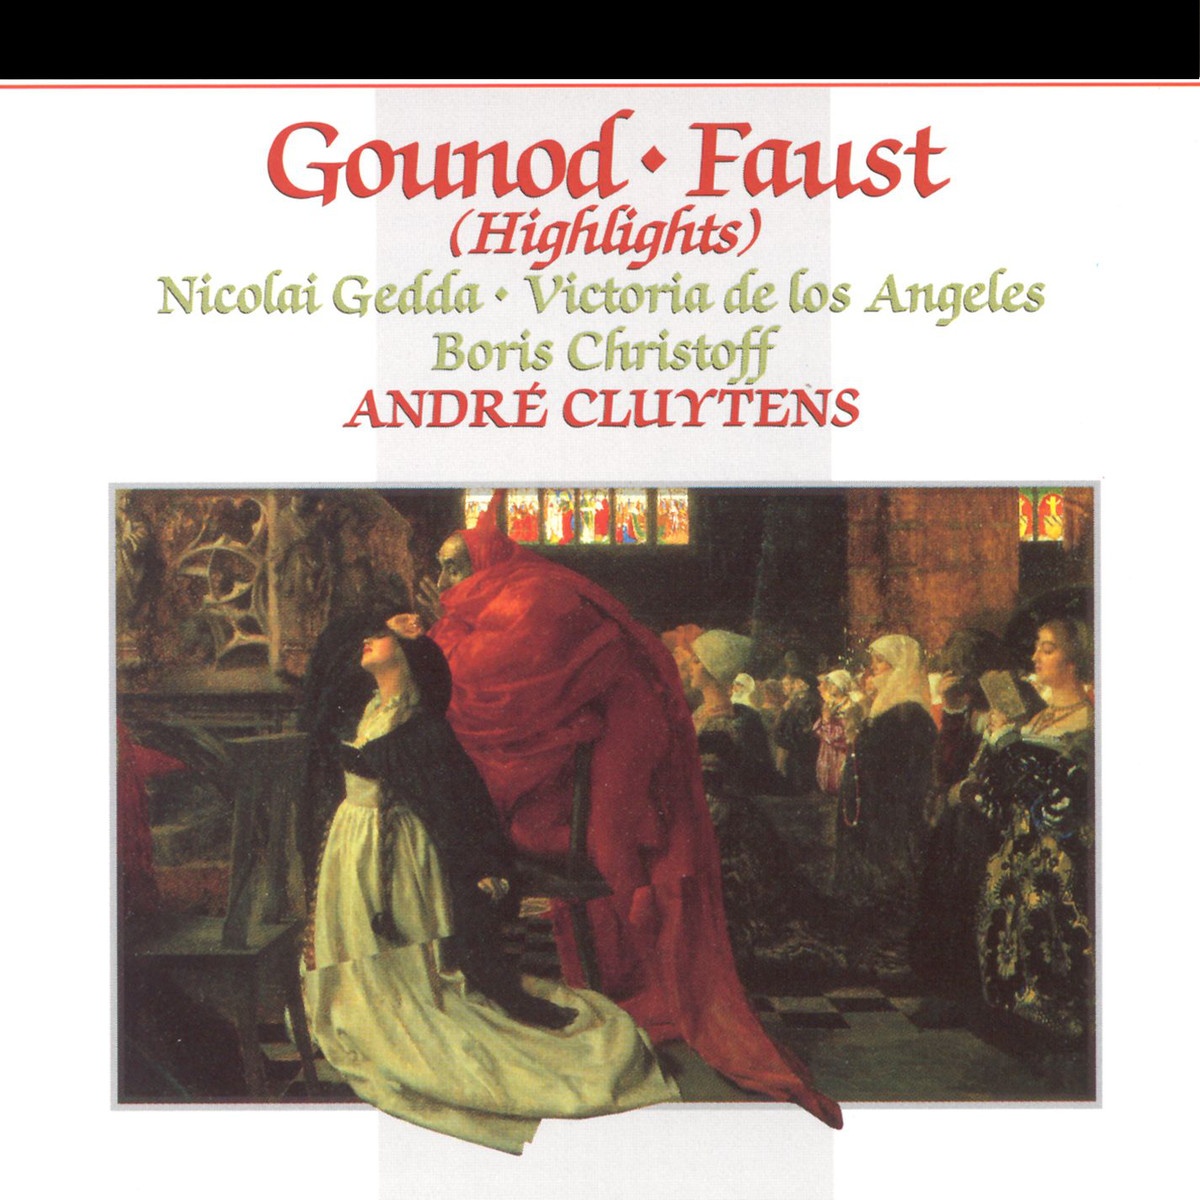 Faust  opera in five acts 1989 Digital Remaster, Act V: Intermezzo ... Vat' en! Faust Me phistophe le s